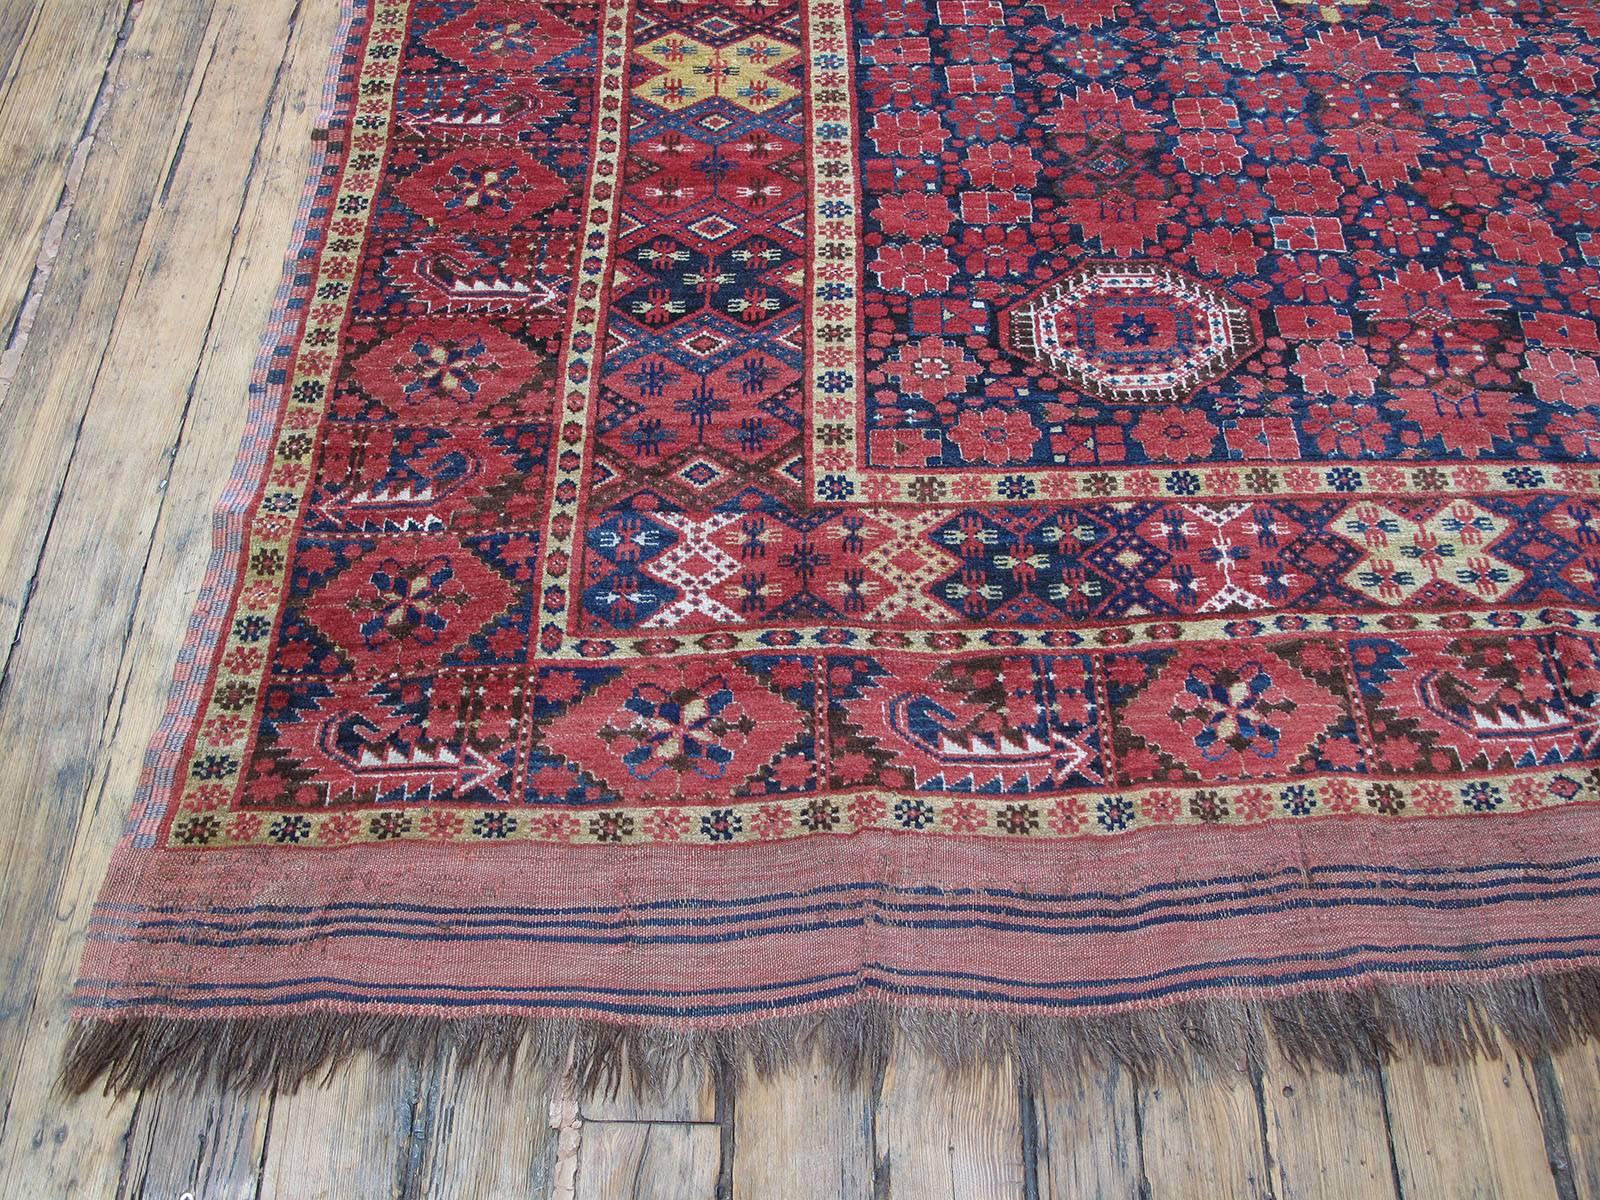 Wool Fantastic Antique Beshir Carpet